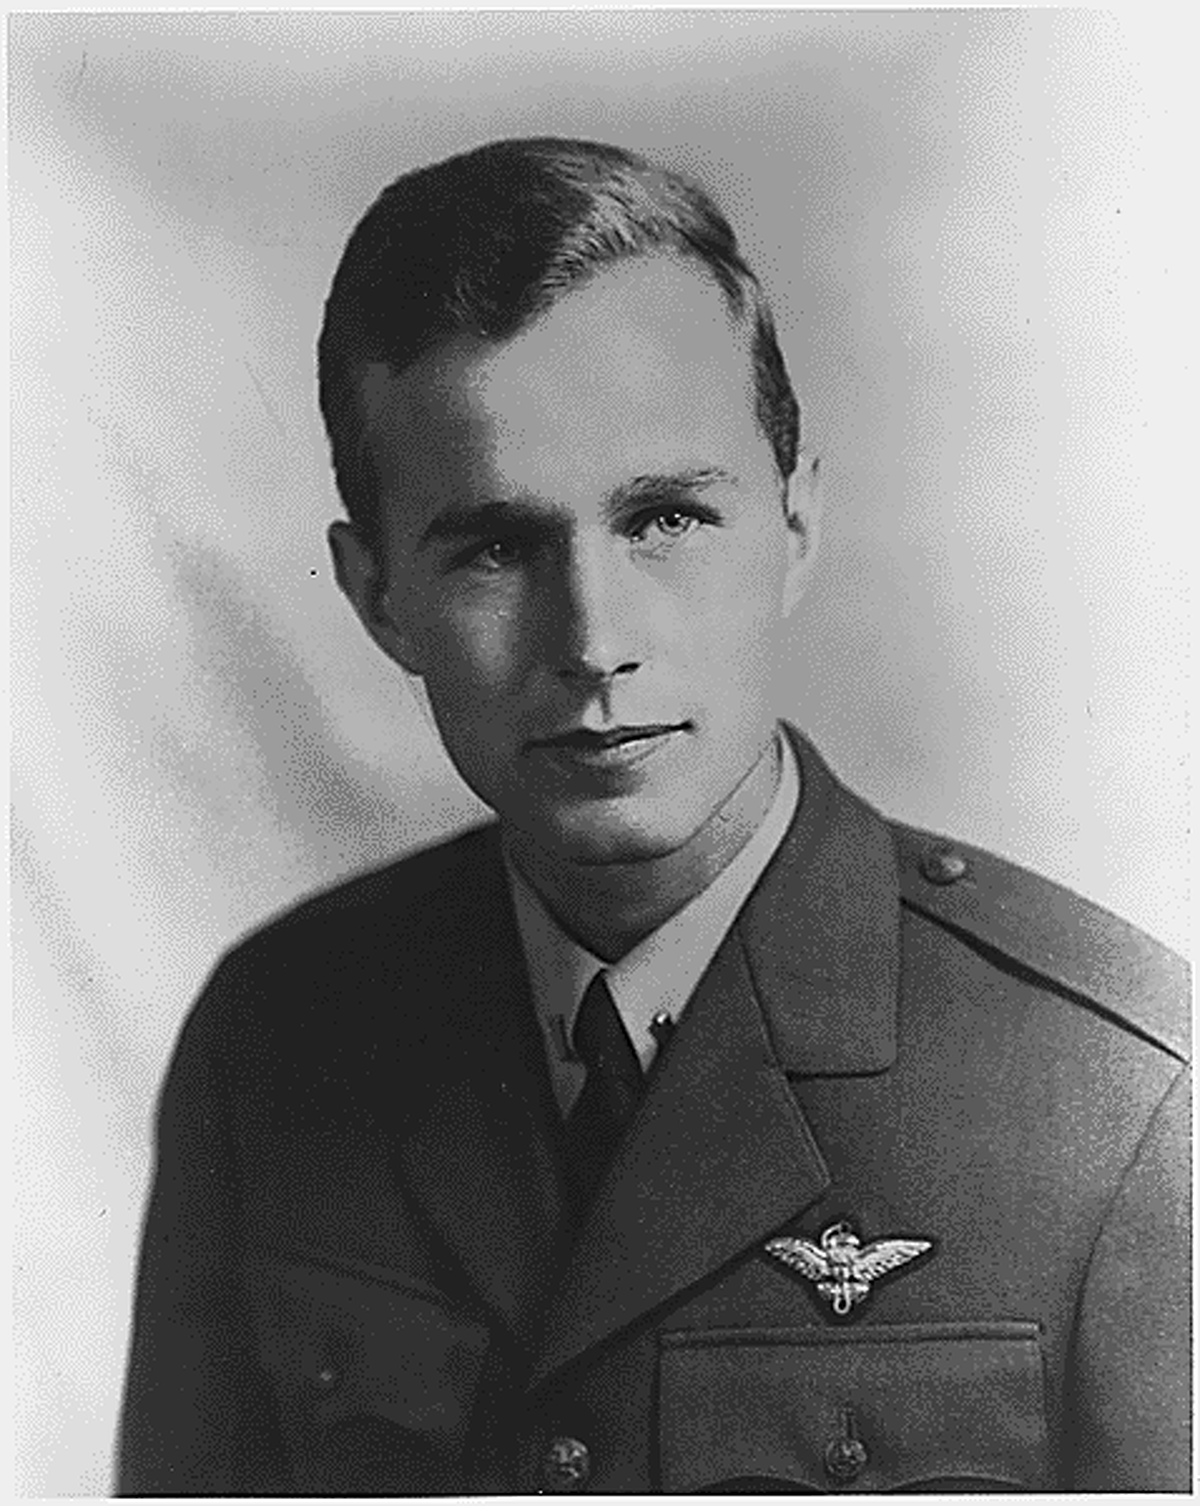 George Bush, Navy pilot during World War II, ca. 1943